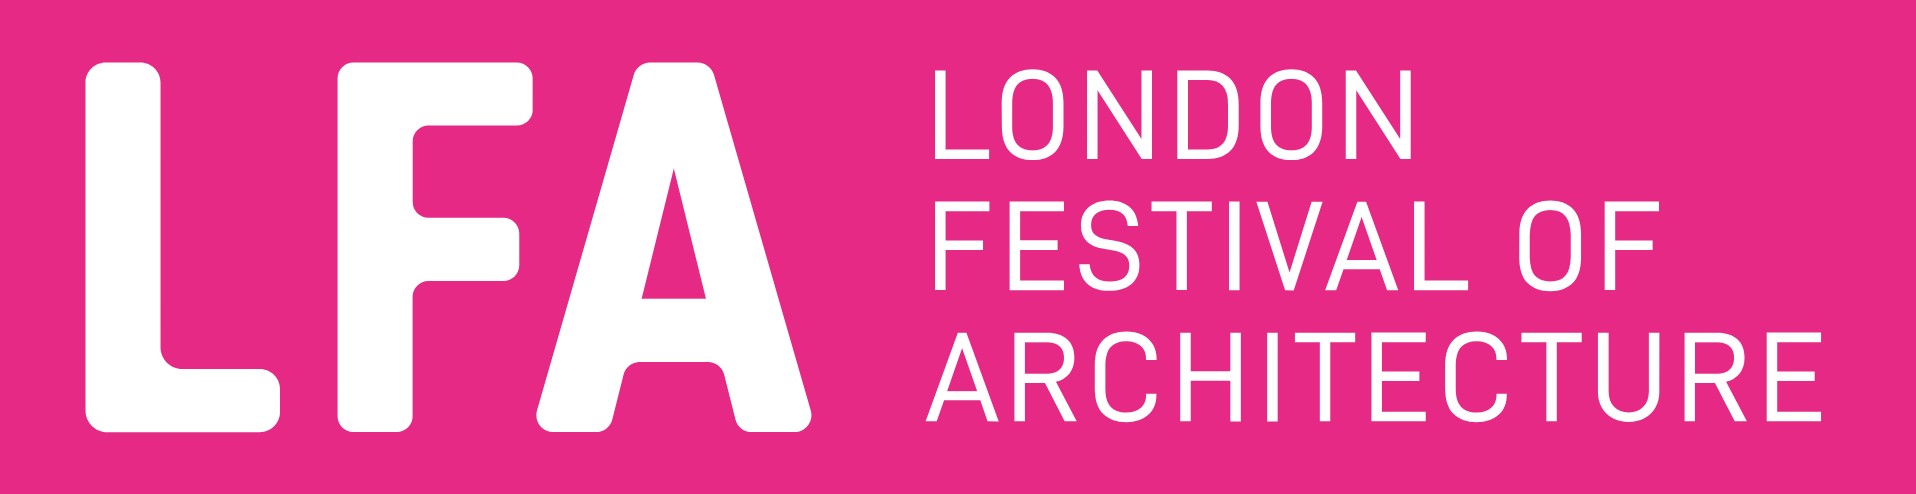 London Festival of Architecture Logo